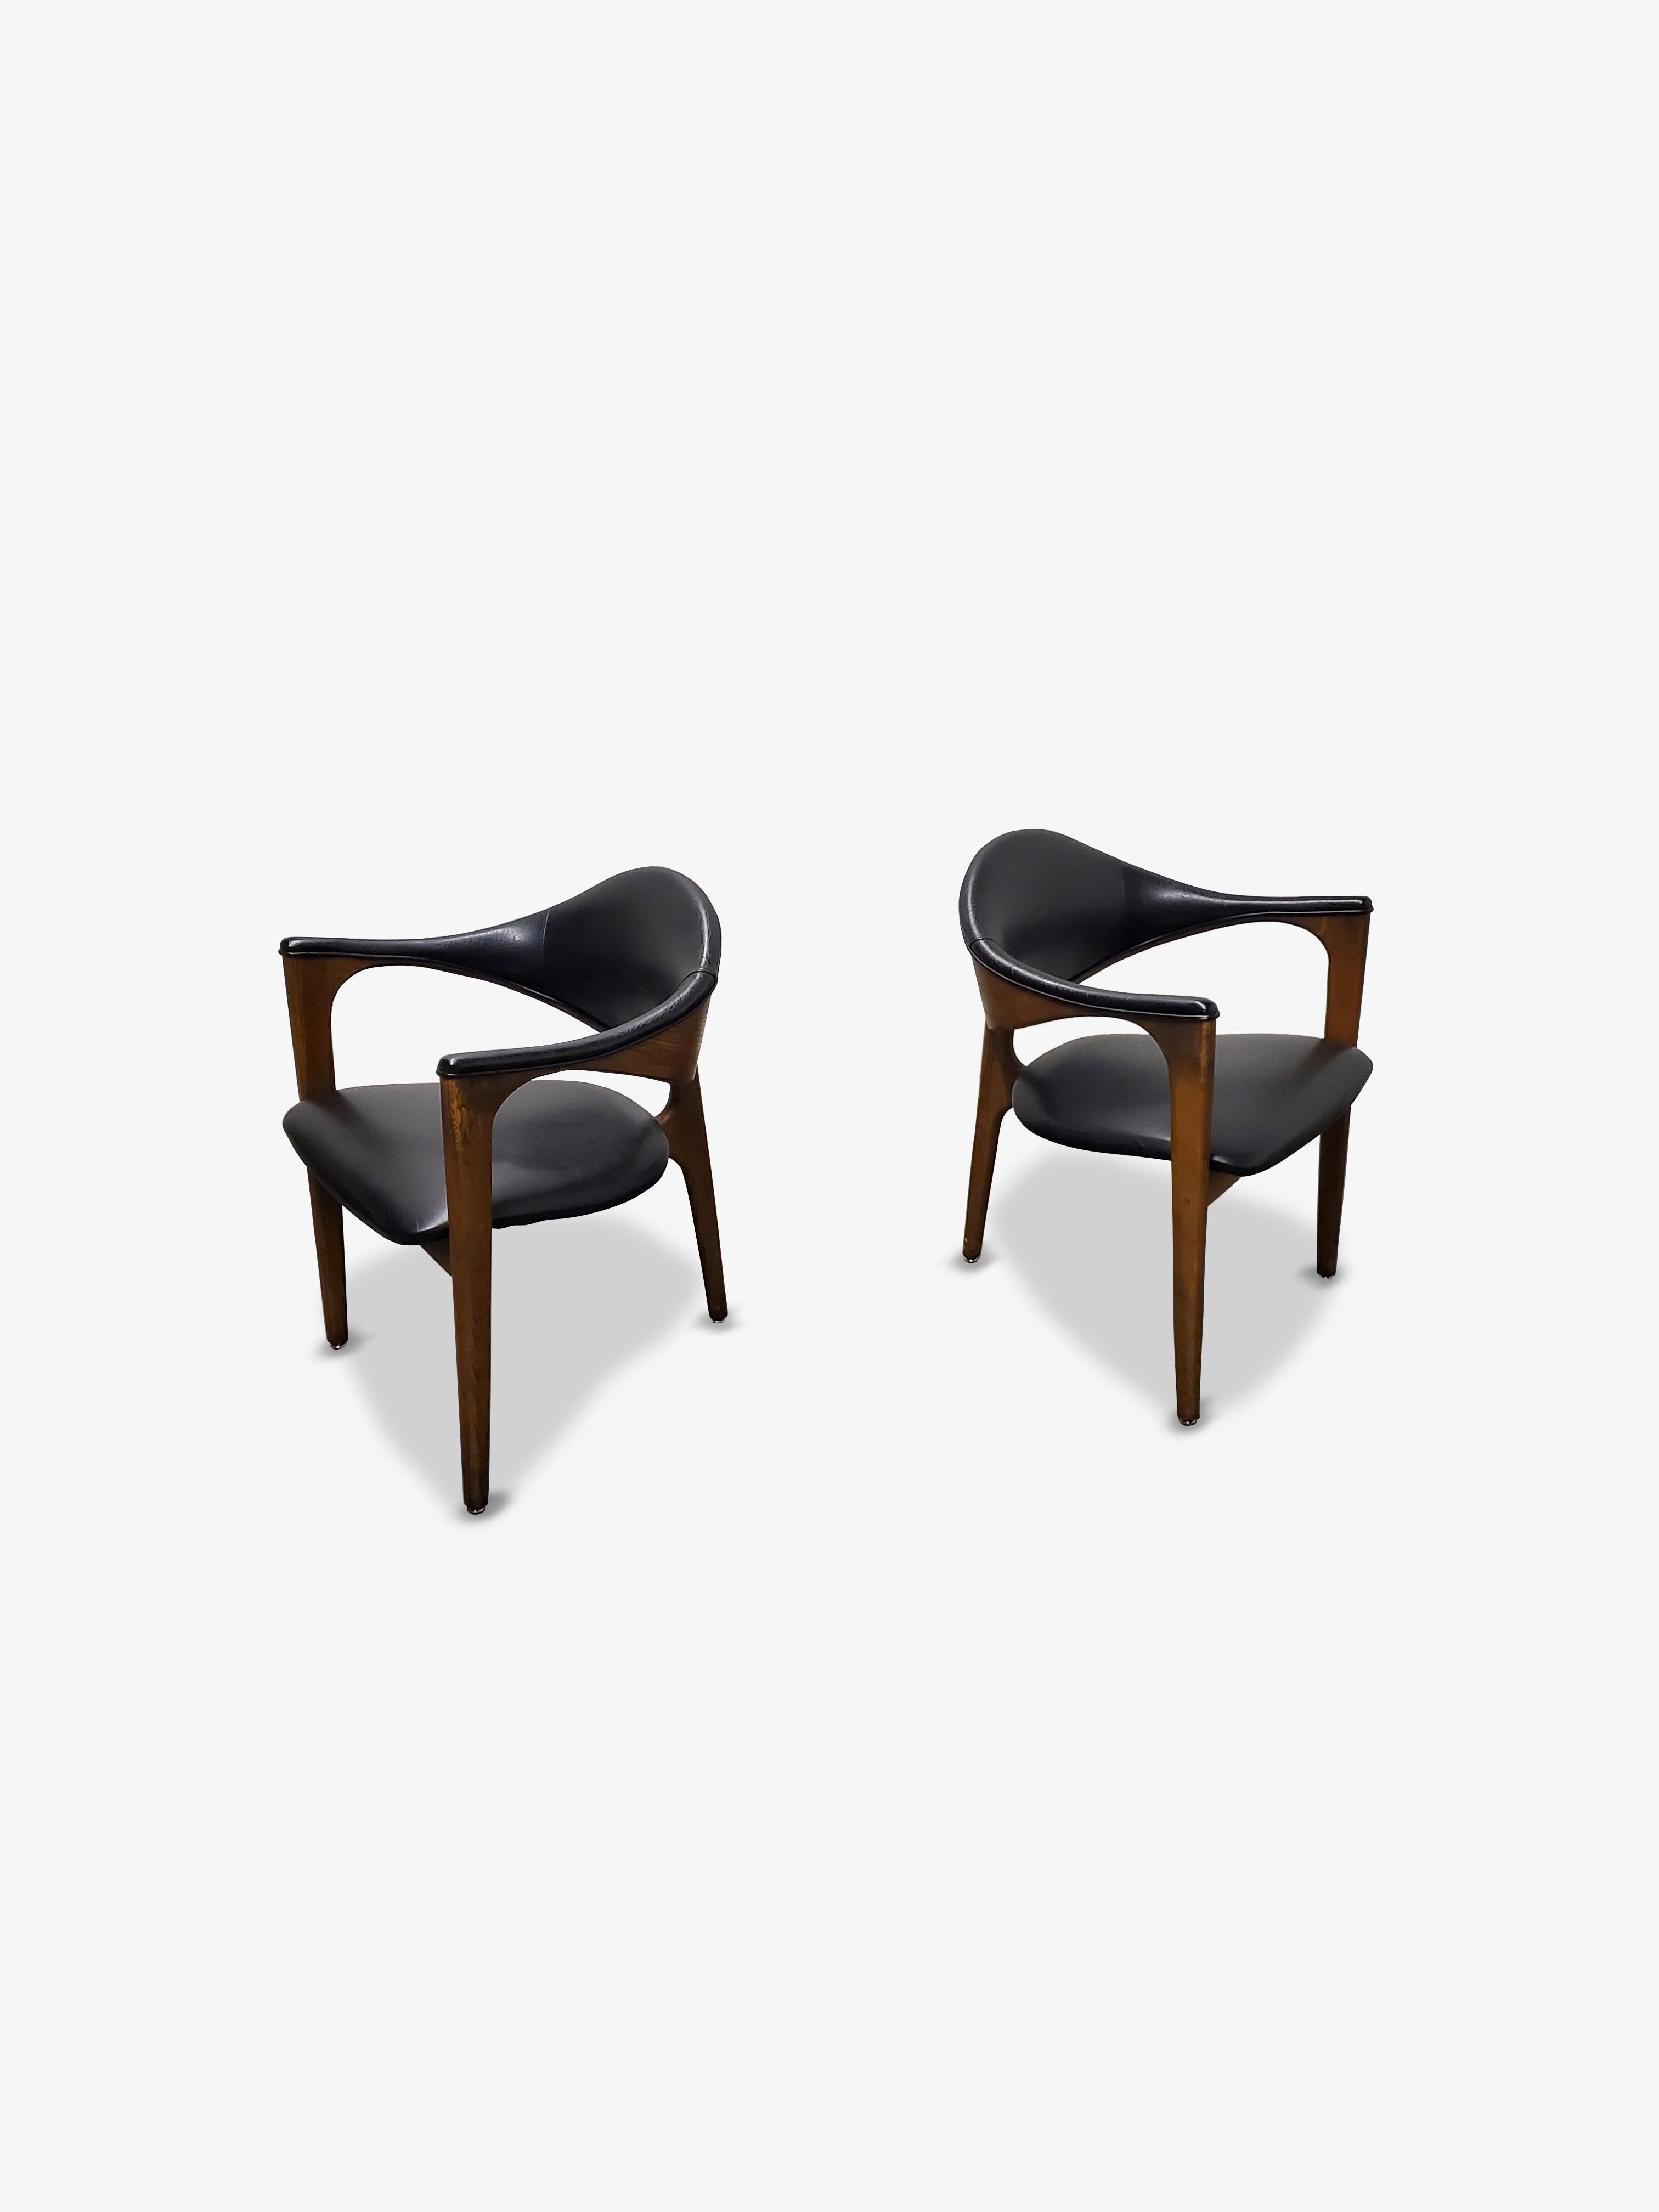 Pair of Mid-Century Modern three-legged chairs.